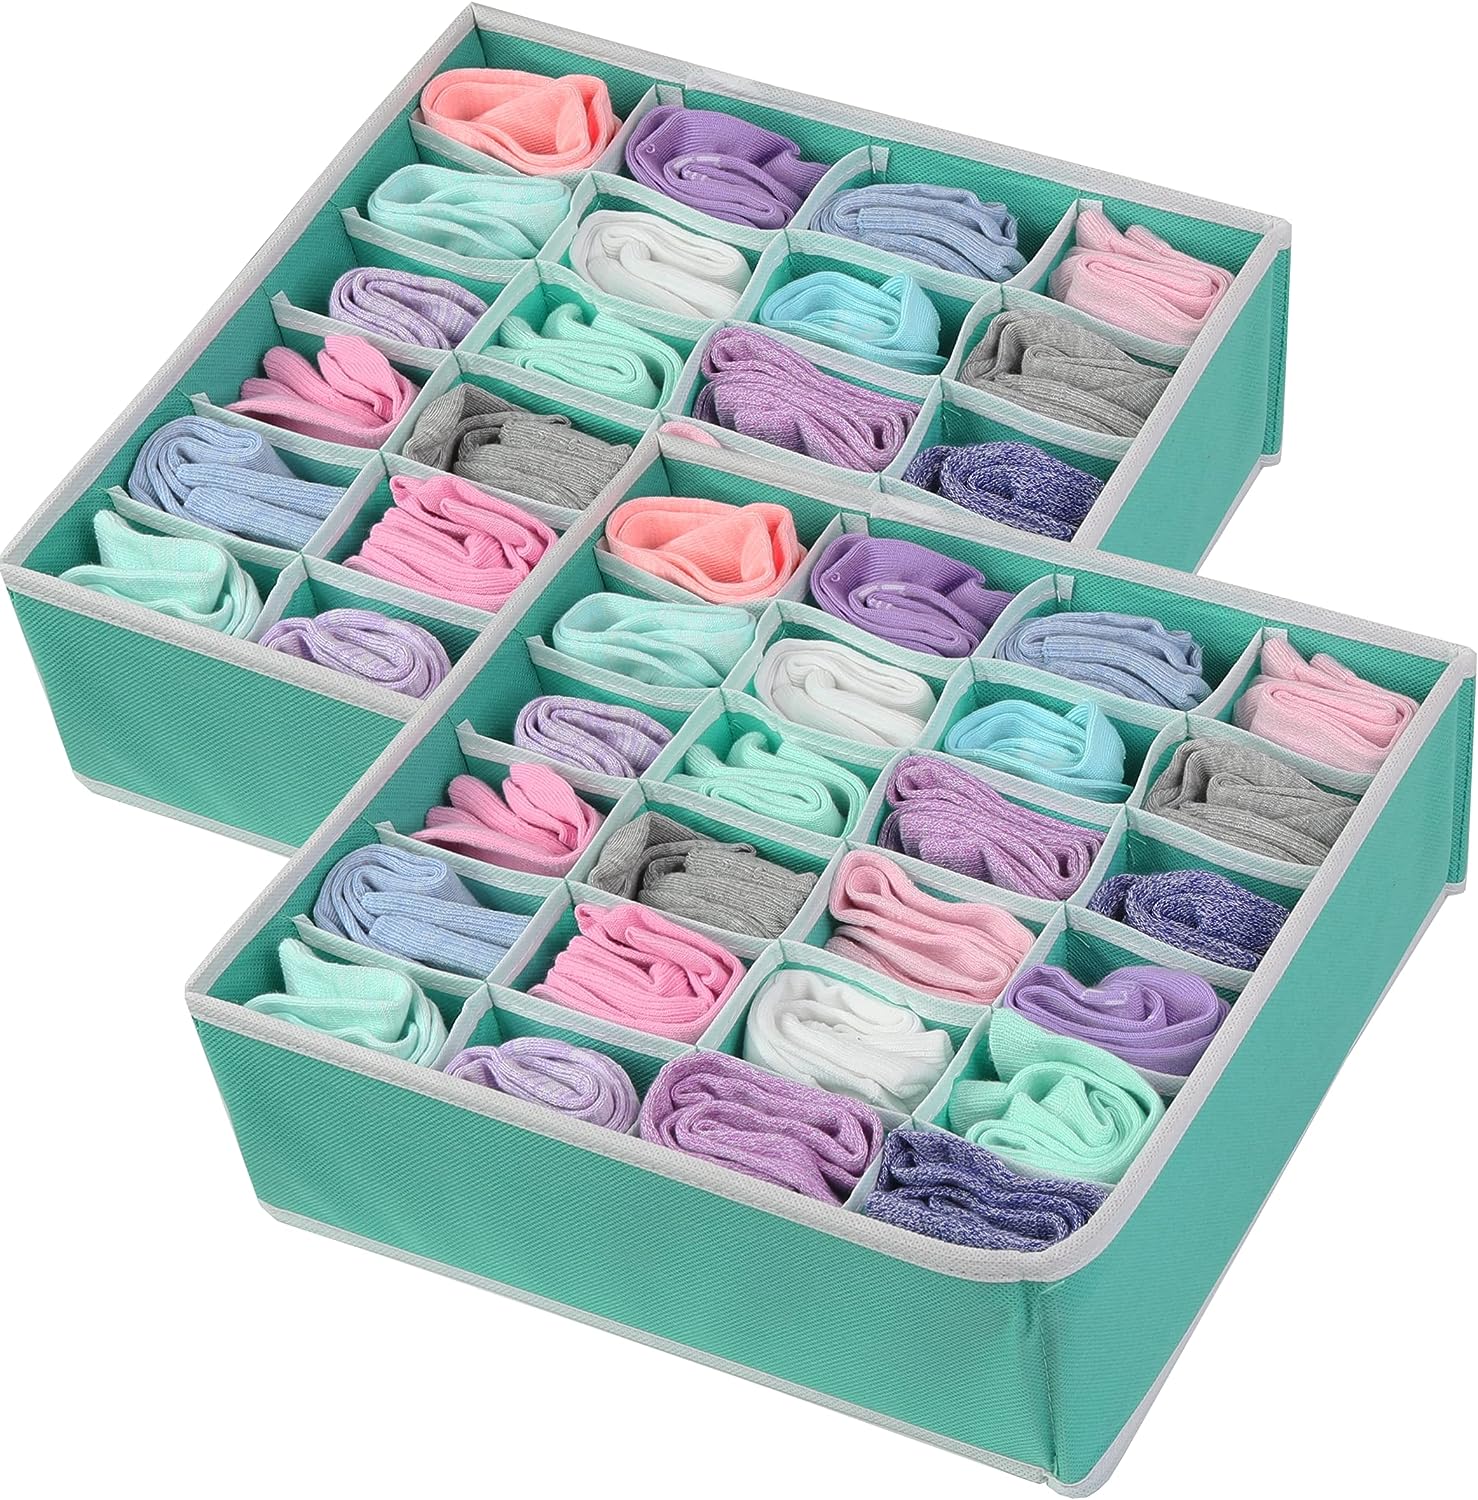 Blushbees® 24 Cell Drawer Divider, 2-Pack Closet Socks Organizer